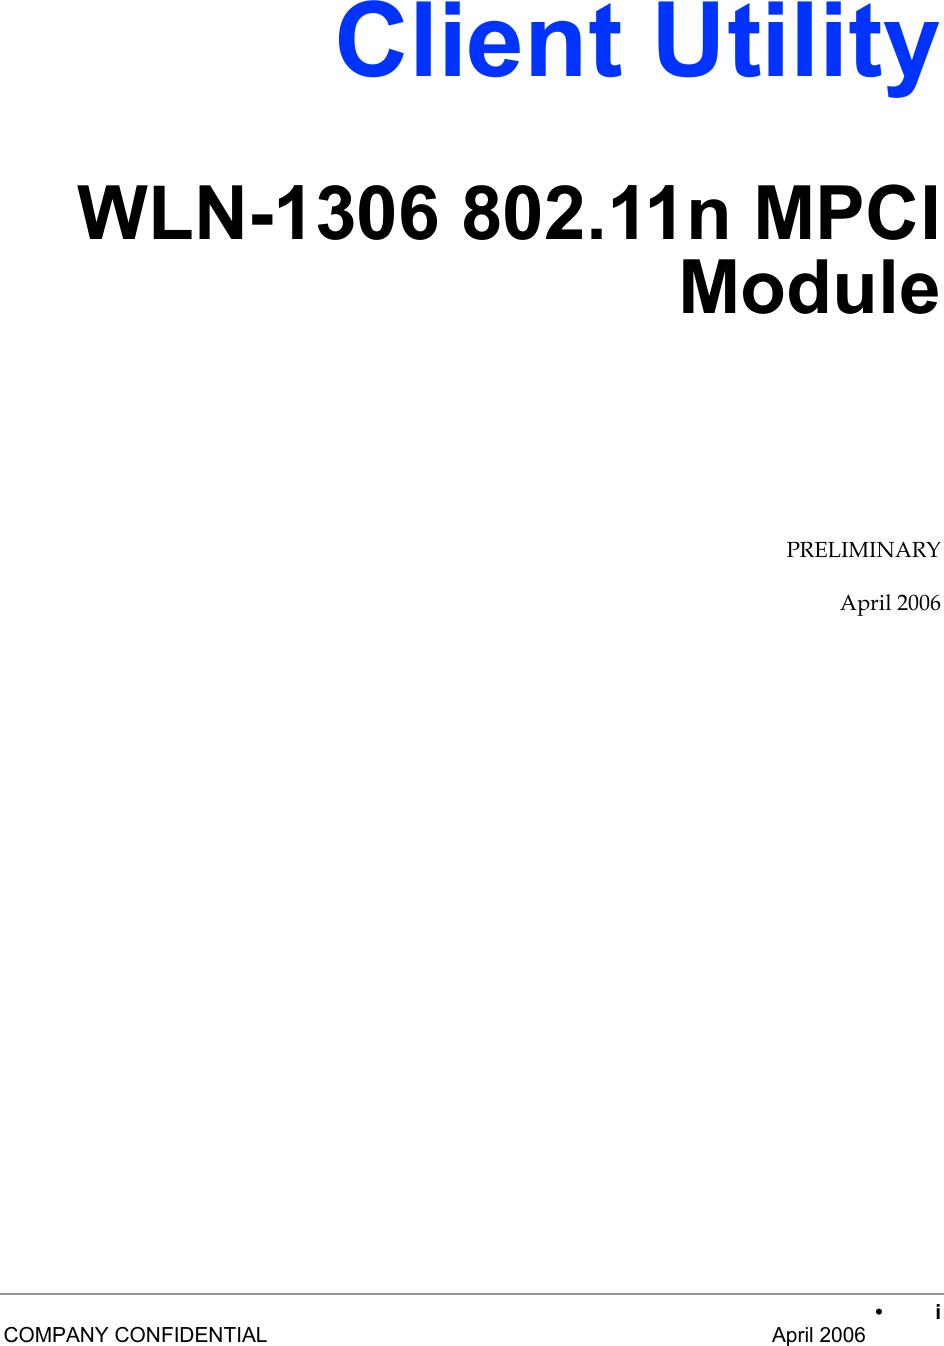    • i COMPANY CONFIDENTIAL    April 2006 Client Utility WLN-1306 802.11n MPCI Module PRELIMINARY April 2006     